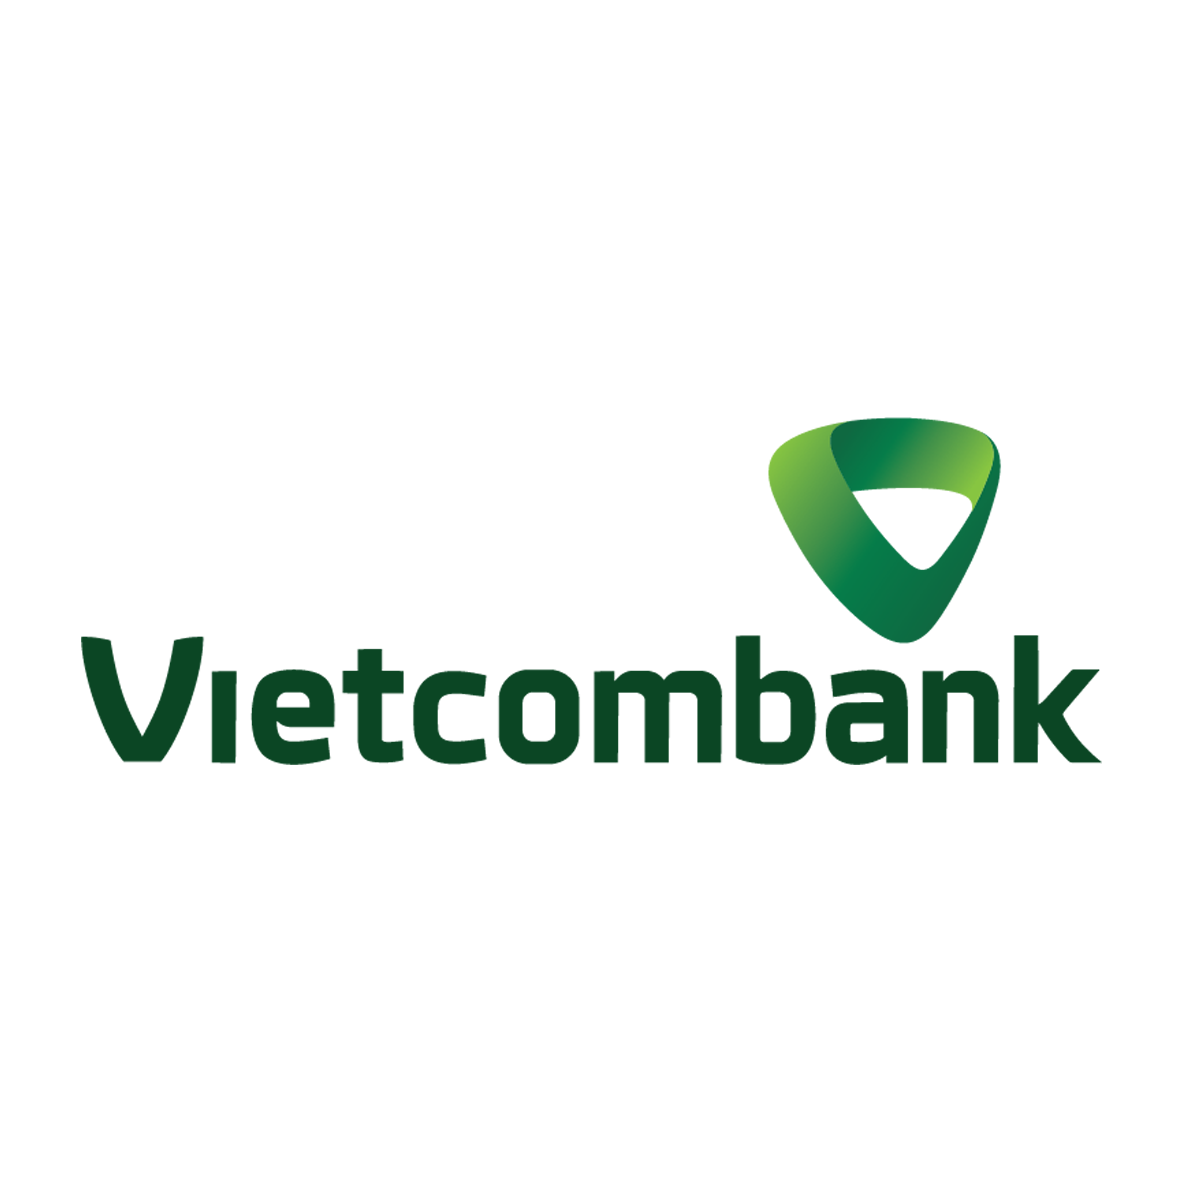 Đối tác Vietcombank